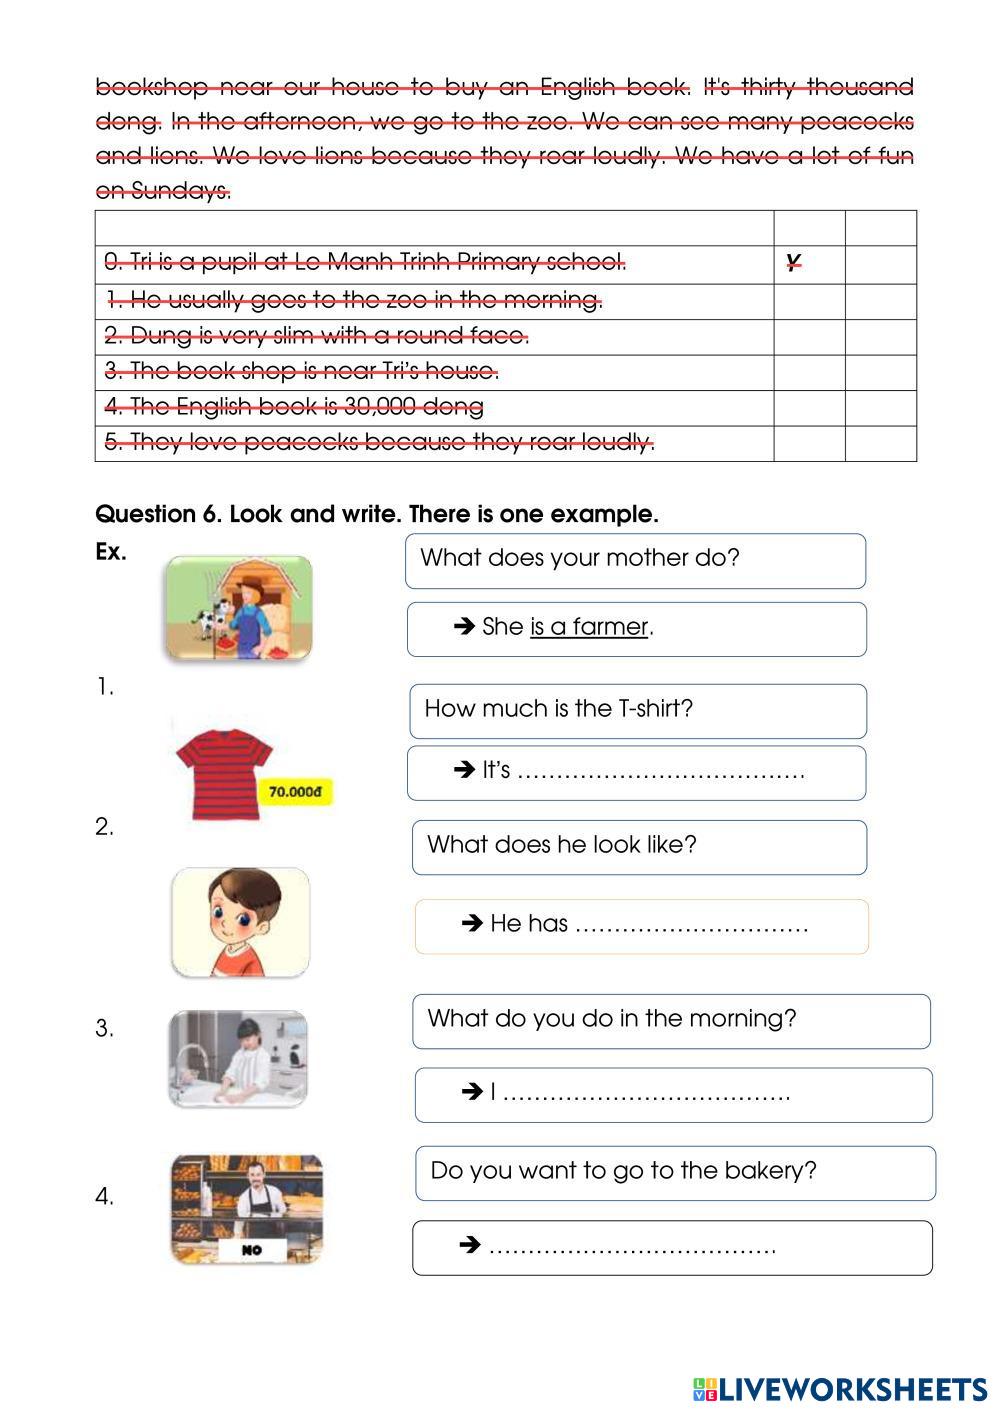 grade 4 creative writing worksheets